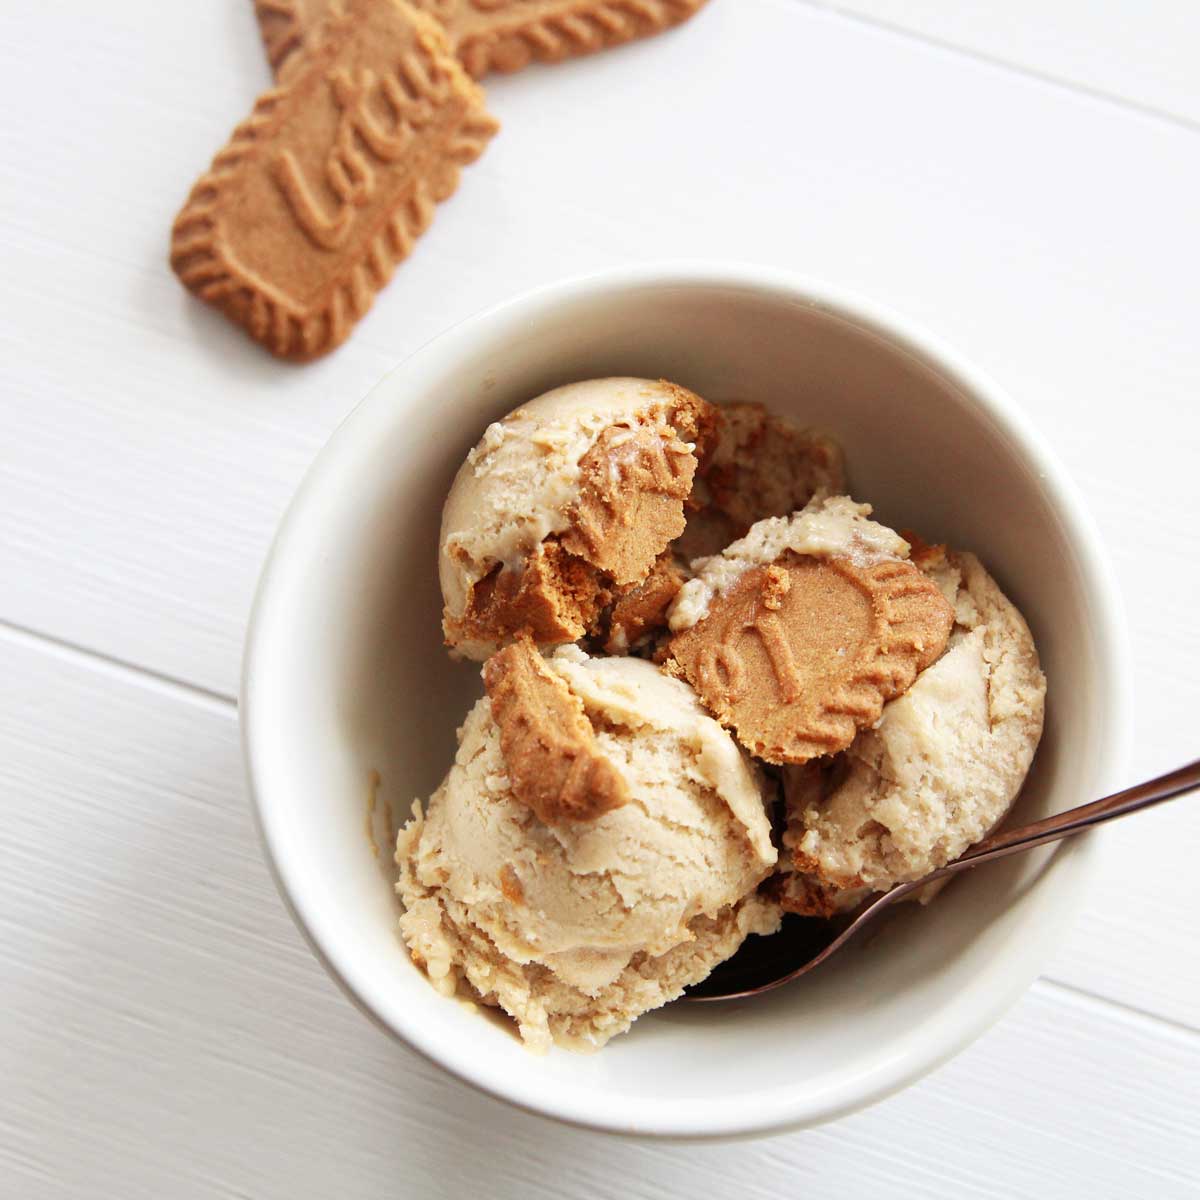 Nutella Chocolate Avocado Ice Cream Recipe (Simple & Healthy) - Nutella Chocolate Avocado Ice Cream